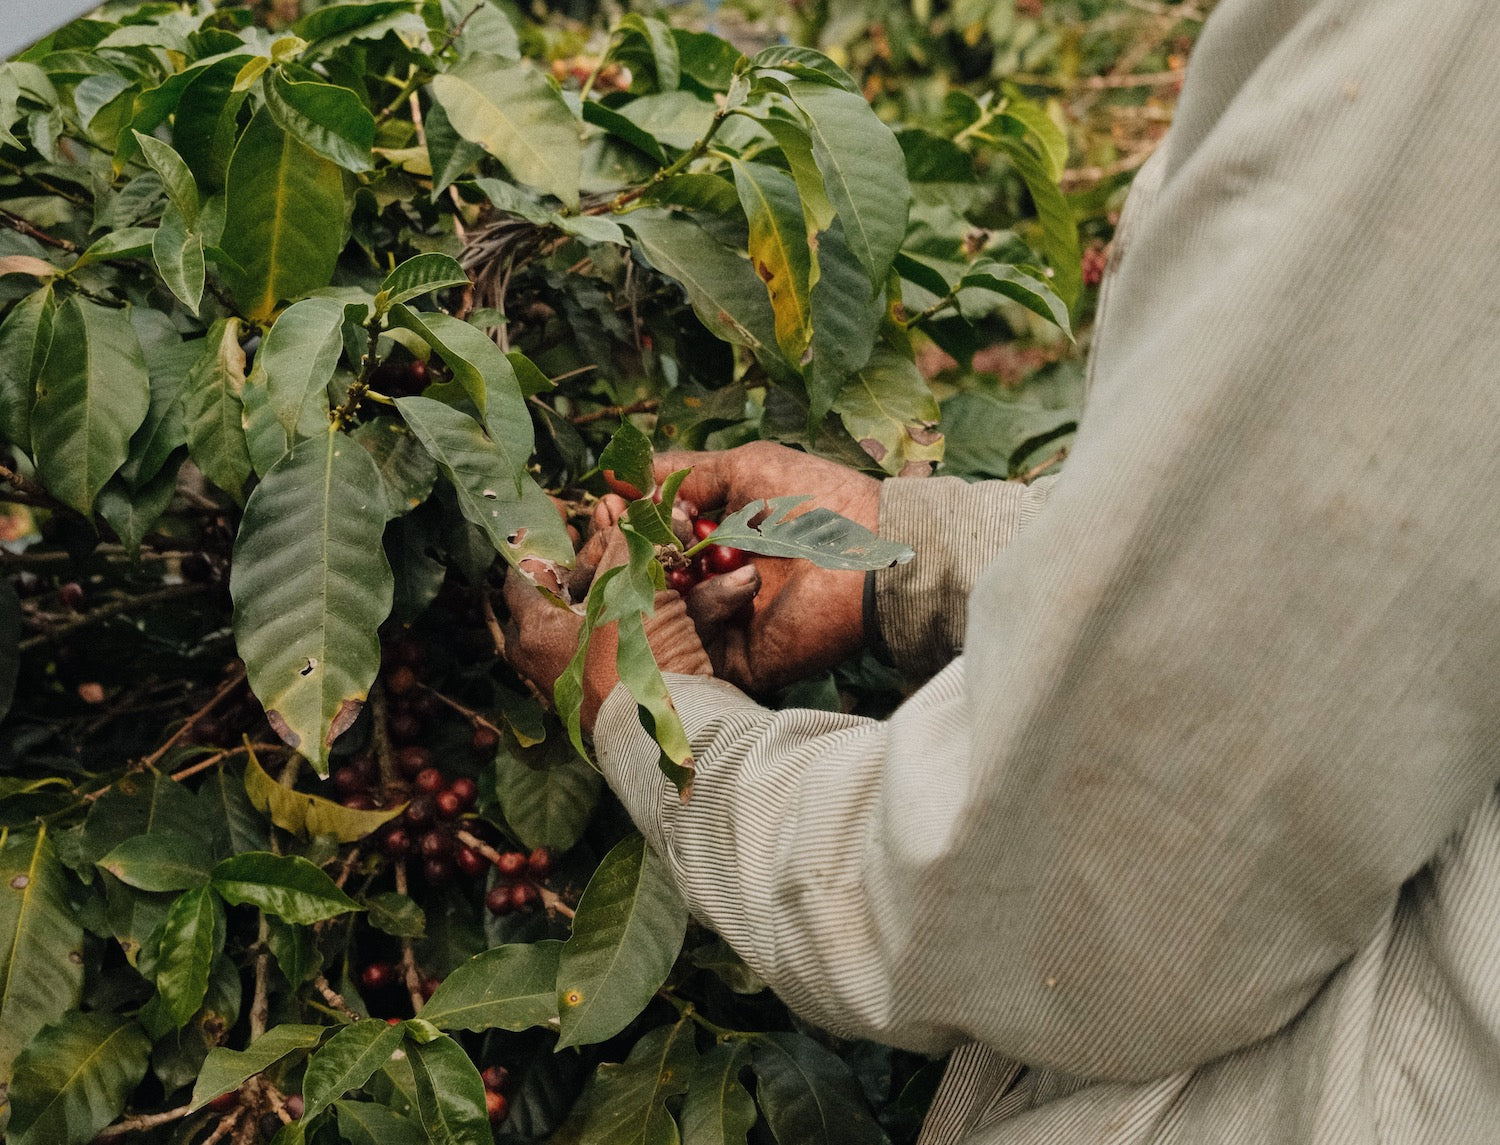 Microlot coffee picking Guatemala producer